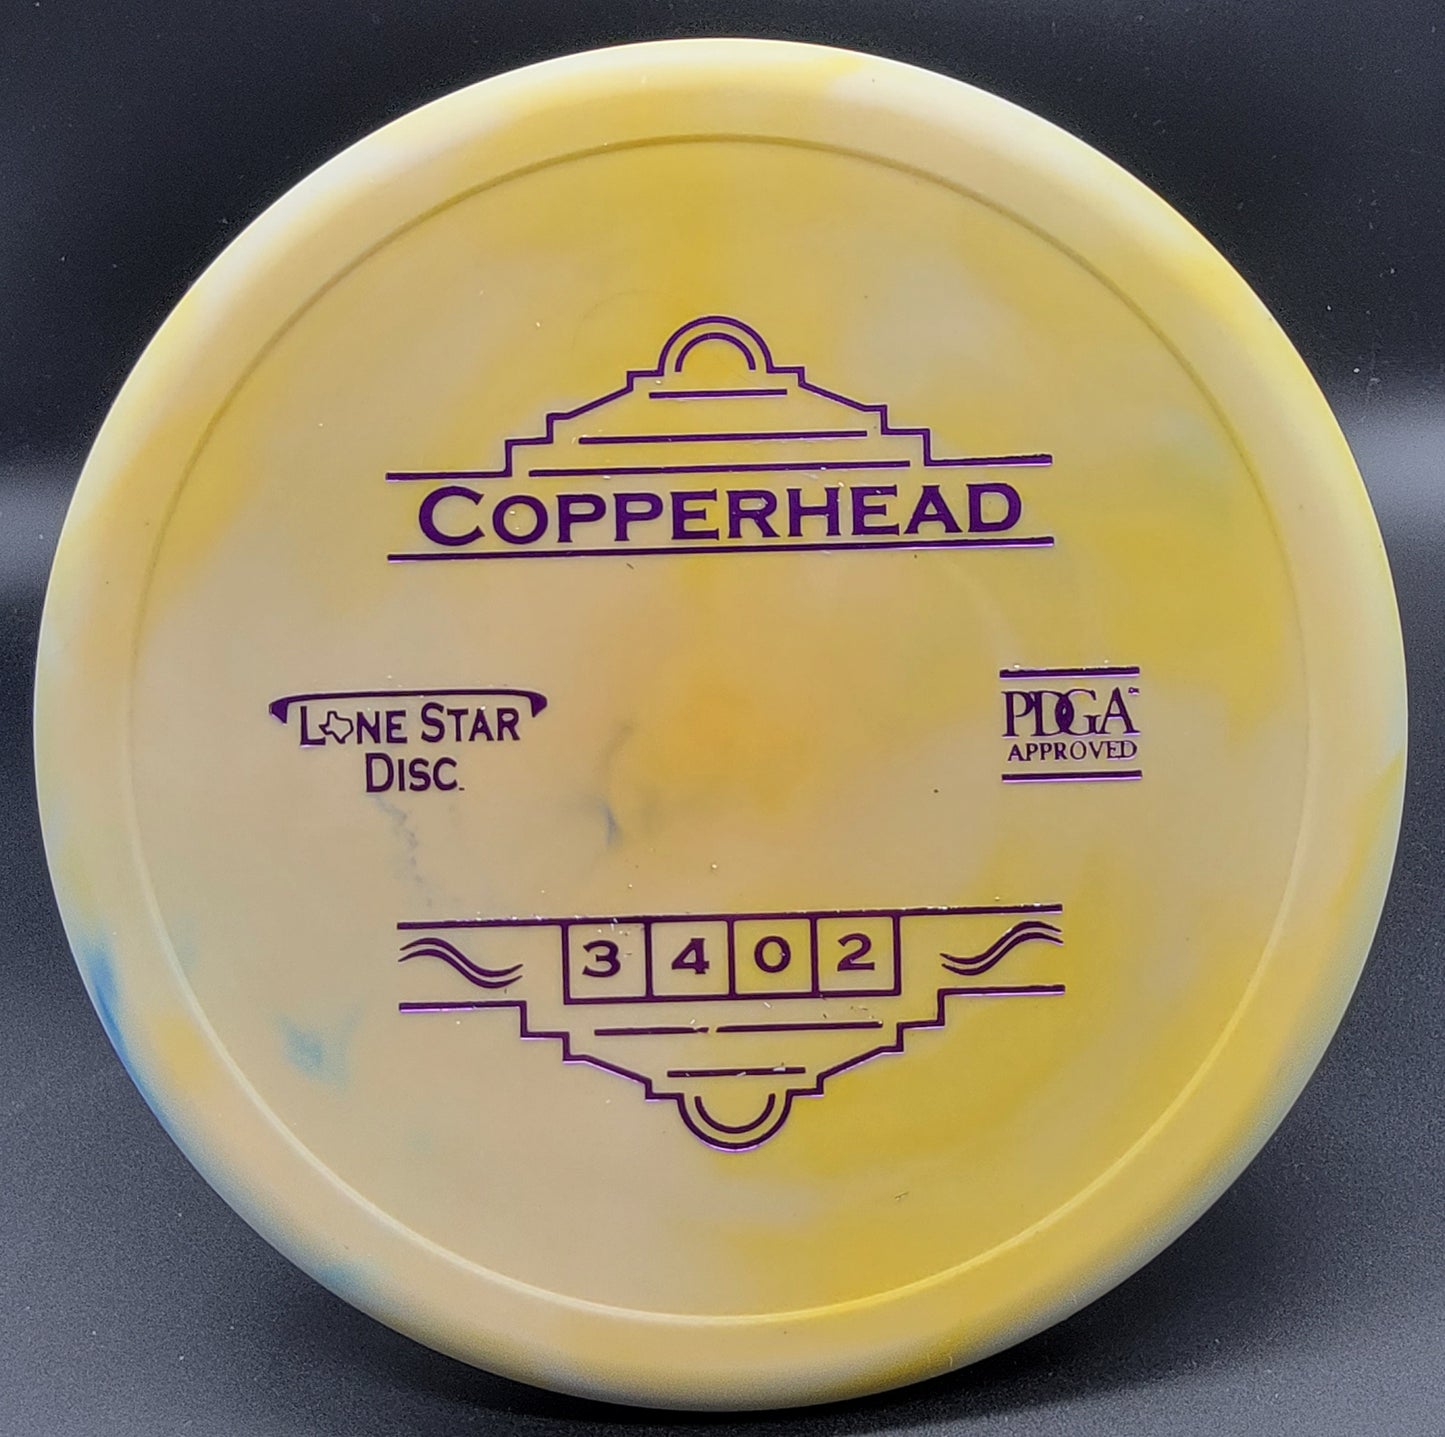 Lone Star Disc V2 Copperhead